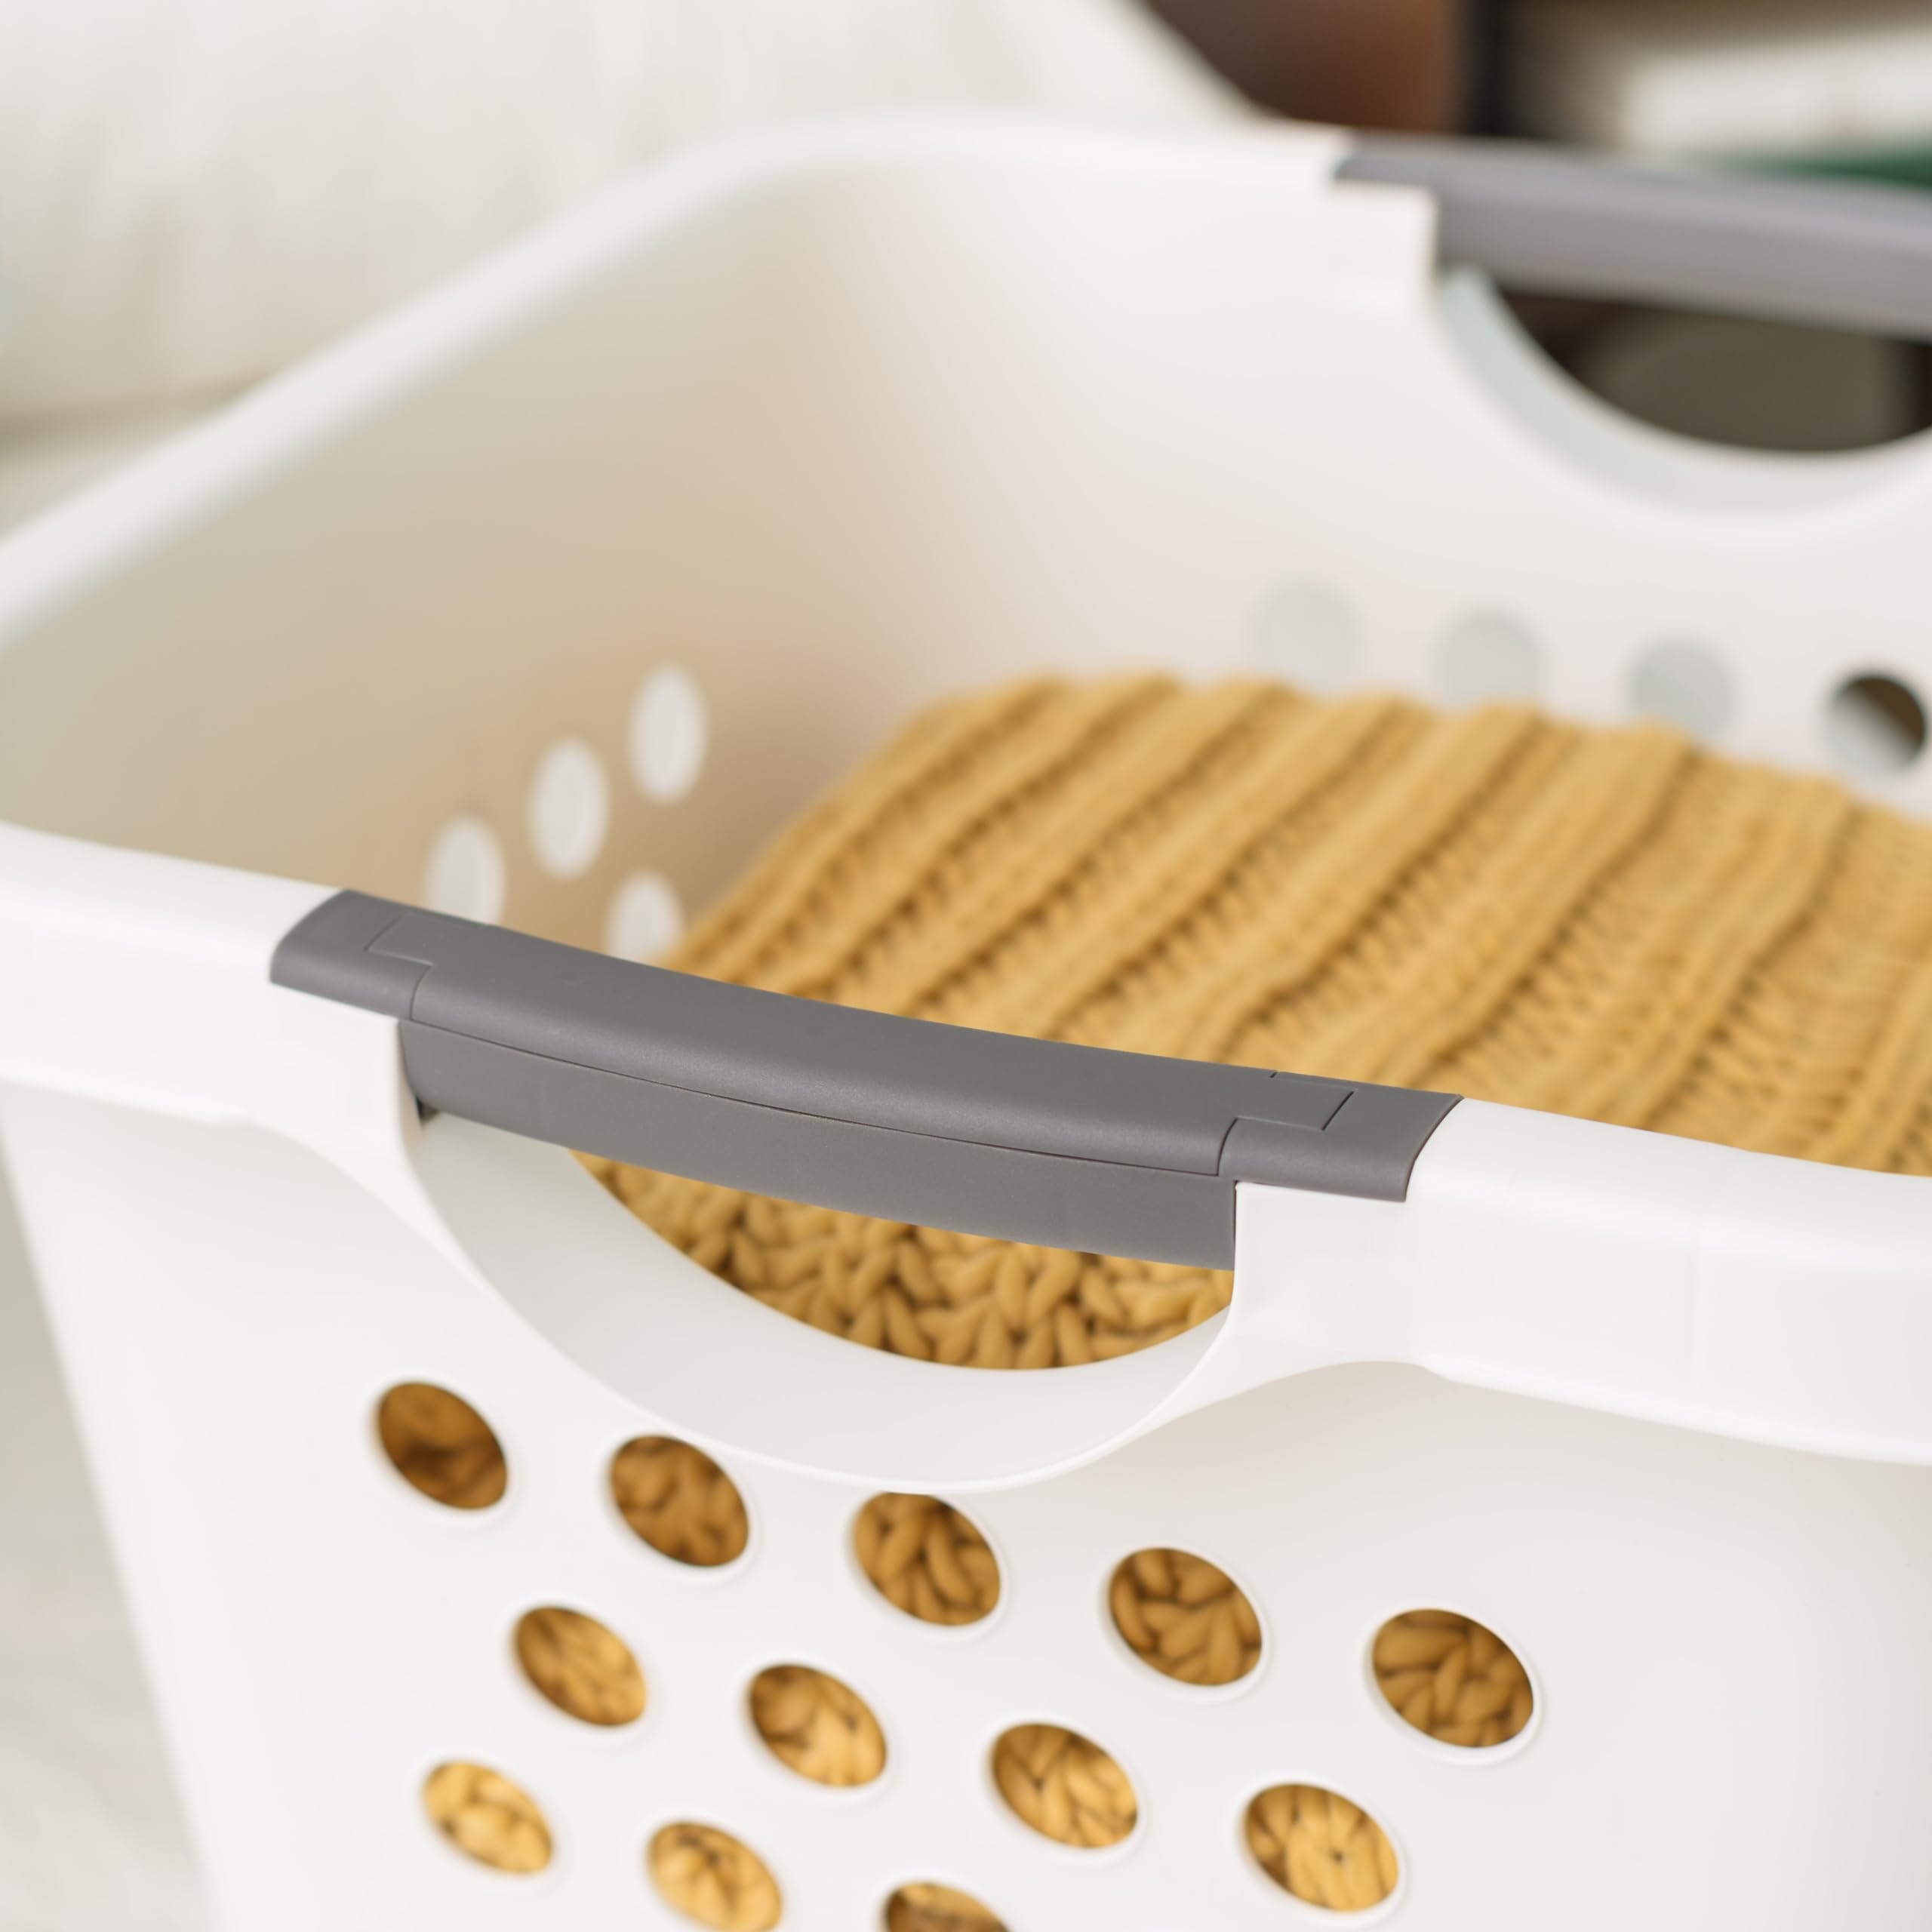 IRIS USA 30L Plastic Laundry Basket Hamper Organizer with Built-In Comfort Carry Handles, for Closet, Dorm, Laundry Room, Bedroom, Nestable, Ventilation Holes, 1 Pack, Medium, White